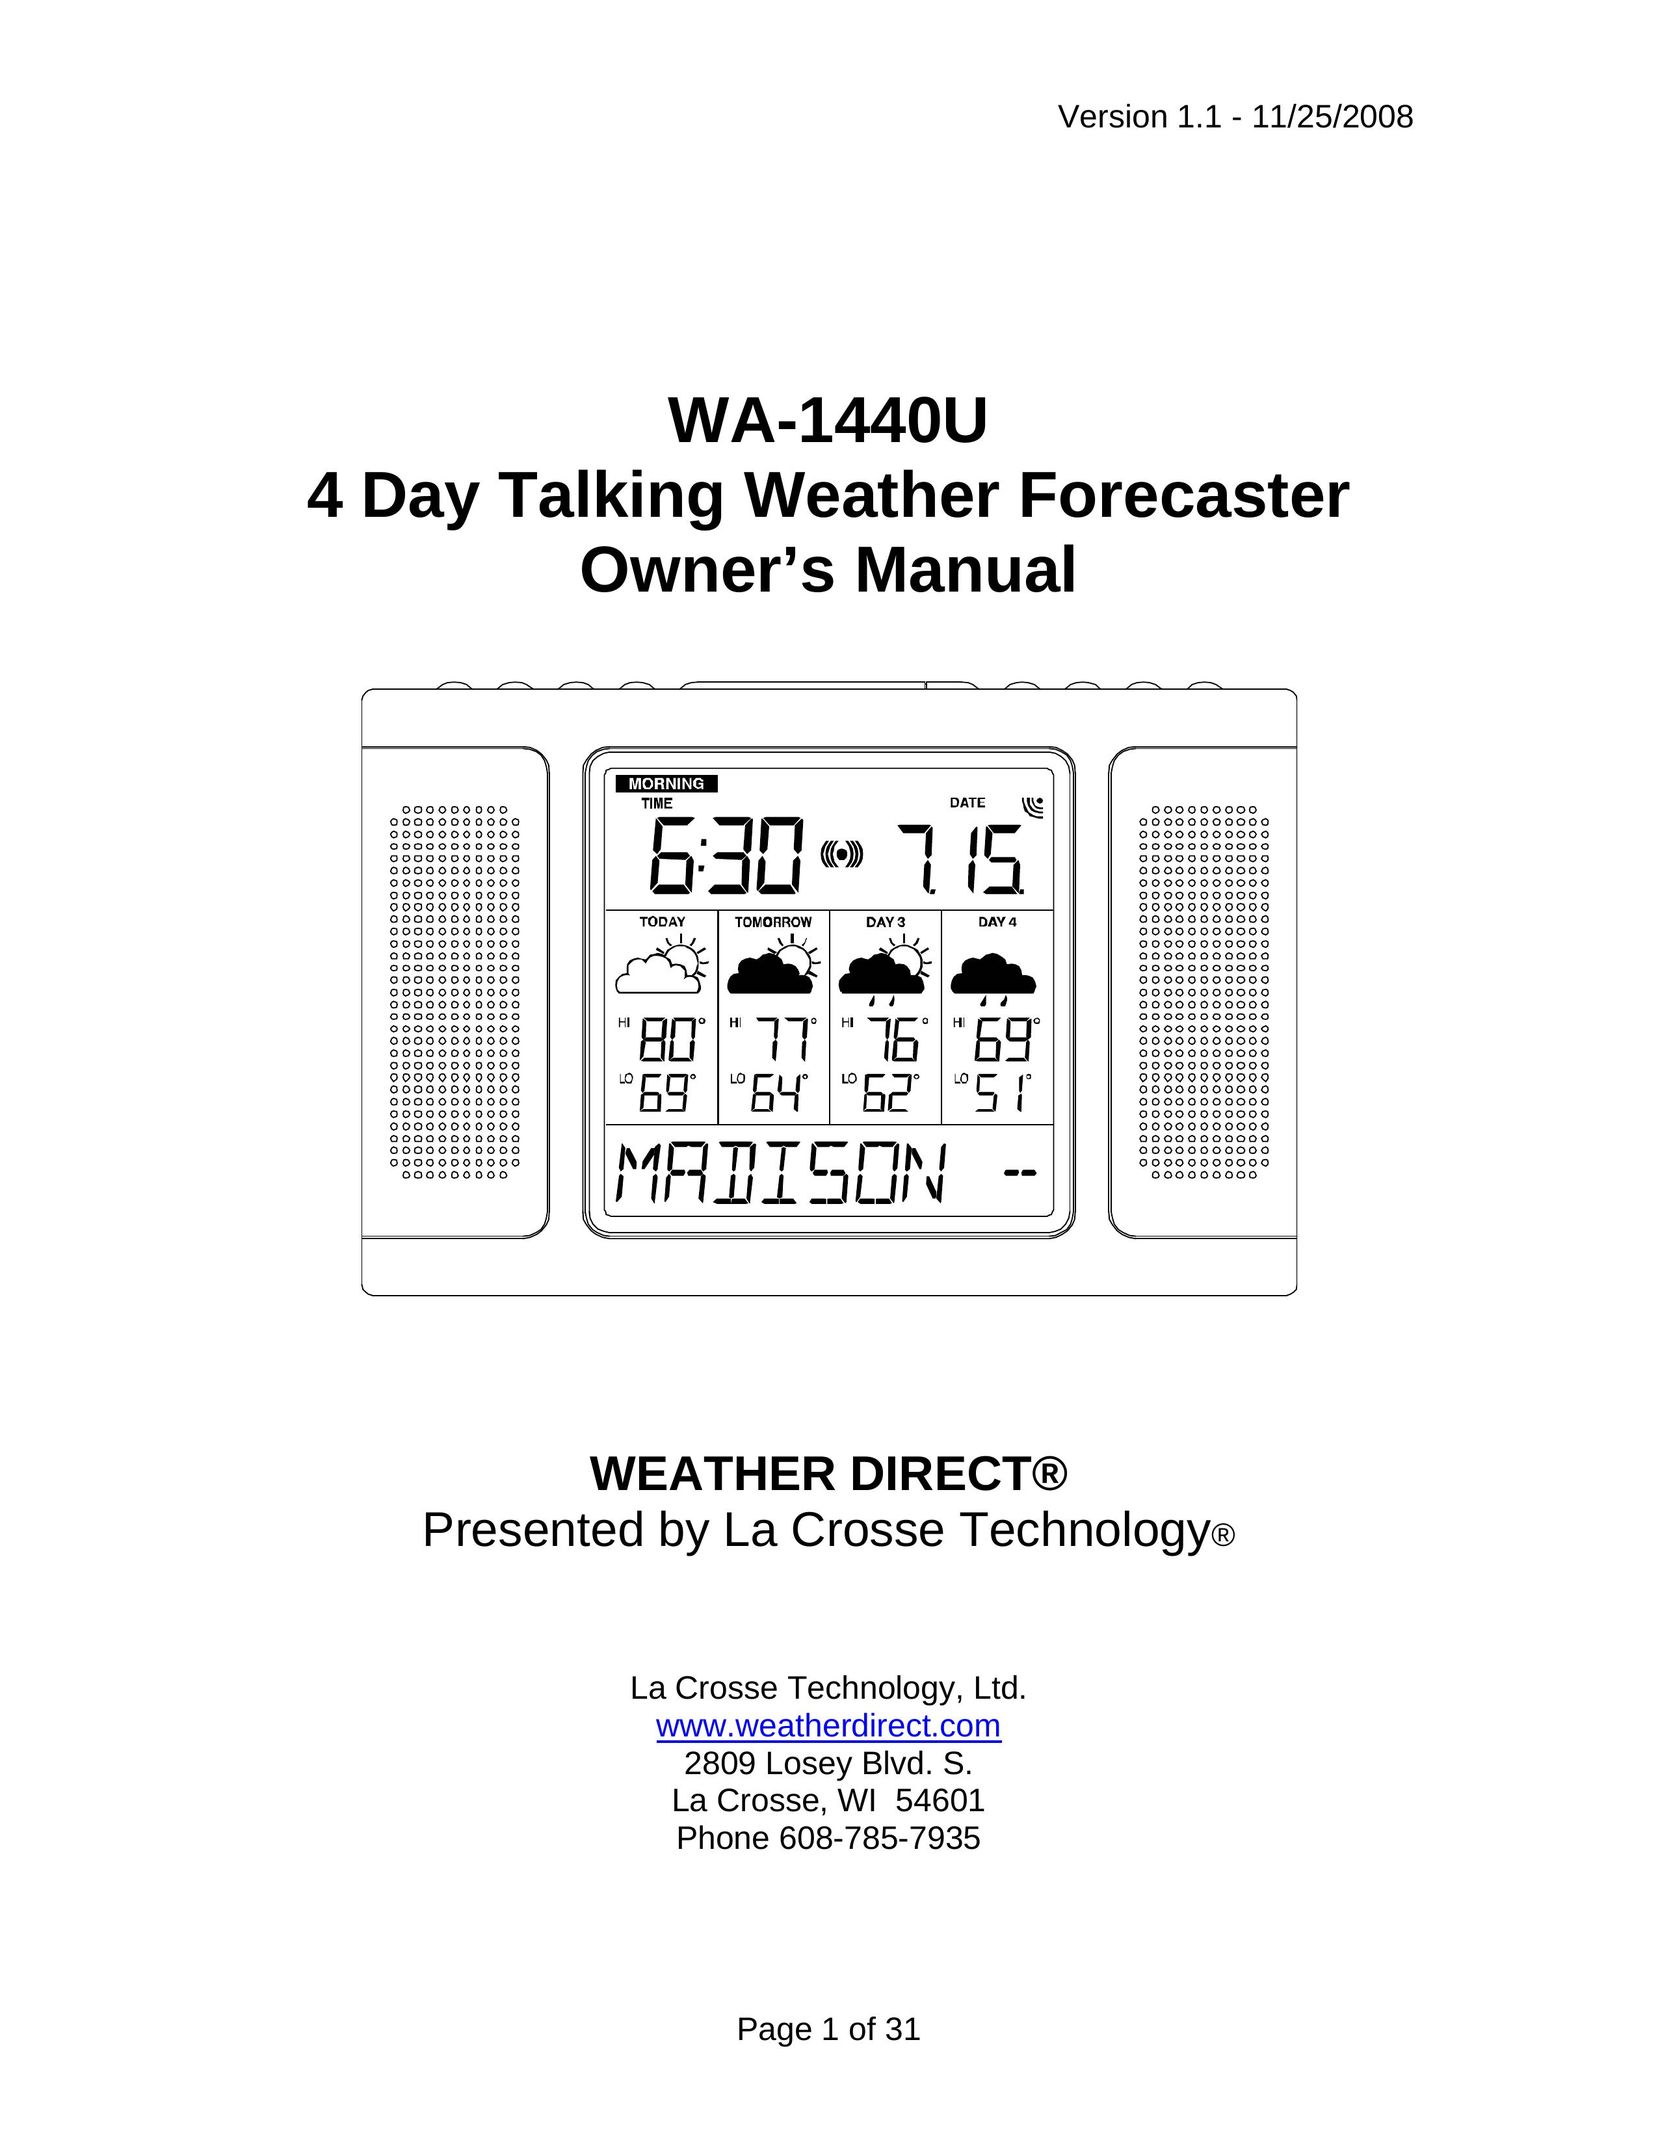 La Crosse Technology WA-1440U Portable Radio User Manual